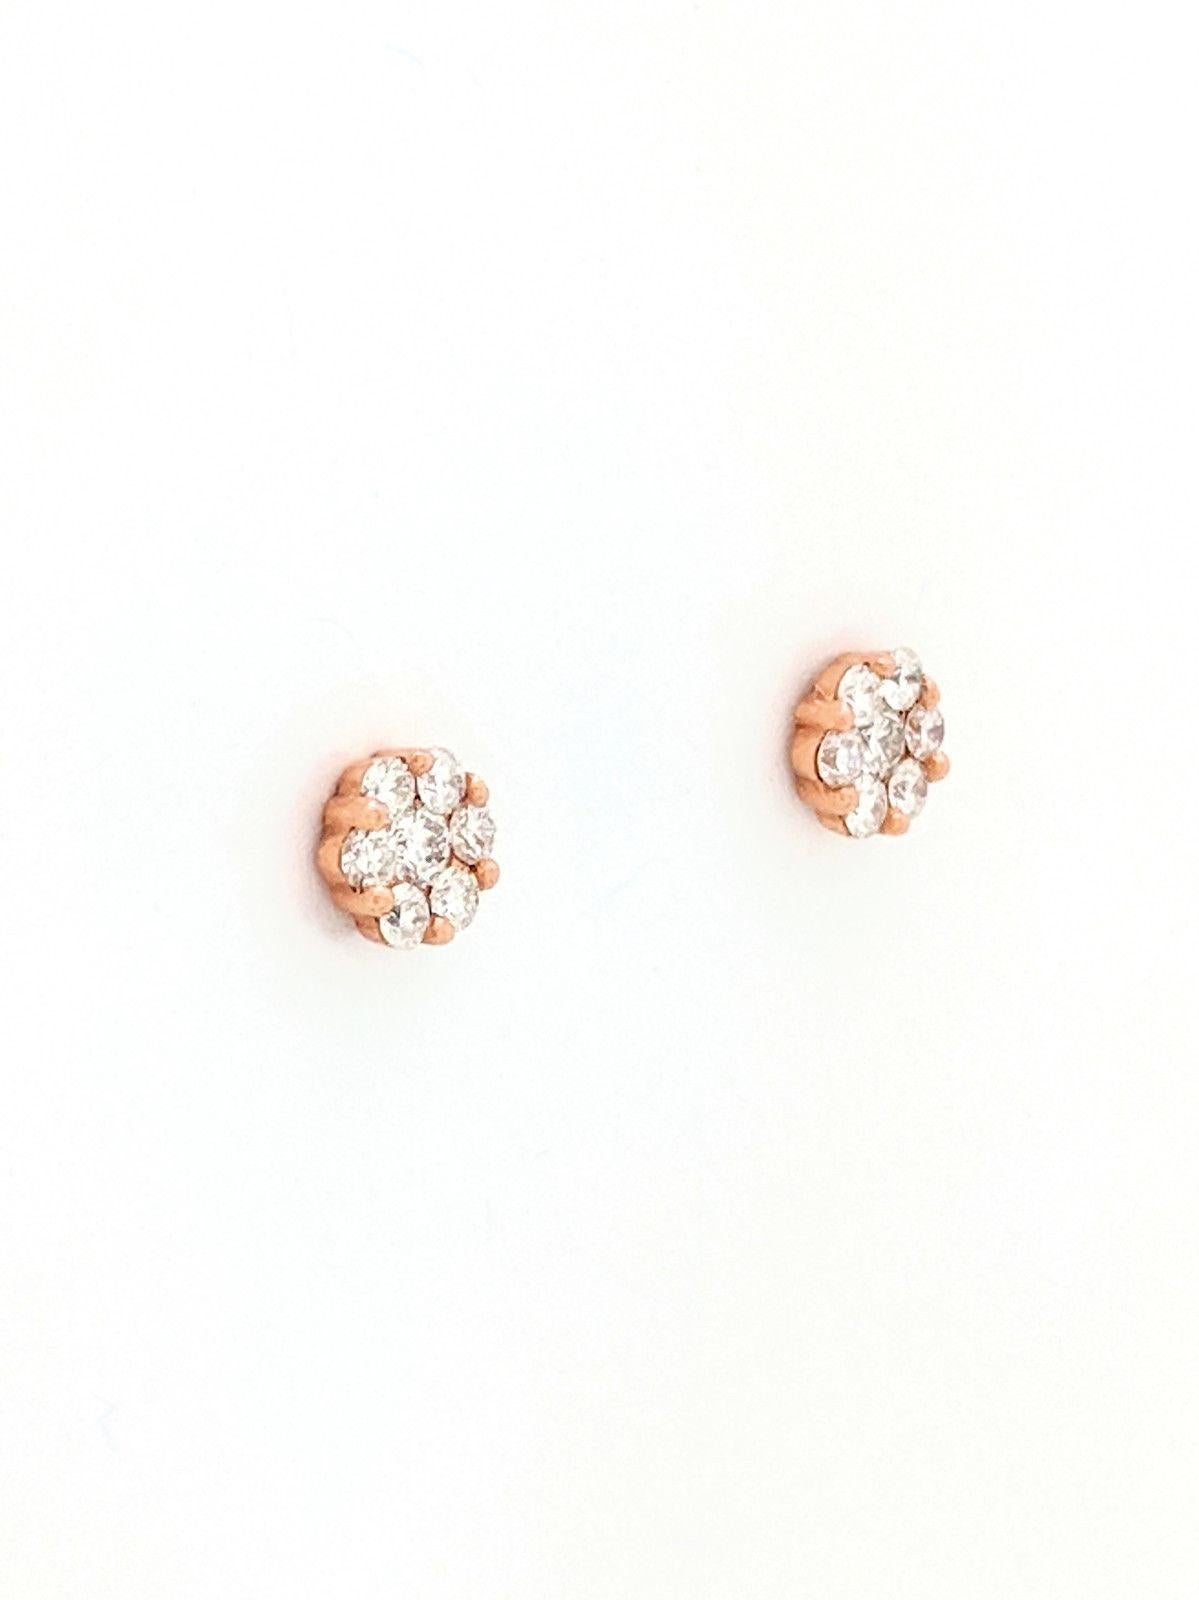 Contemporary 14 Karat Rose Gold Illusion Set Diamond Stud Earrings .50 Carat SI1-G/H